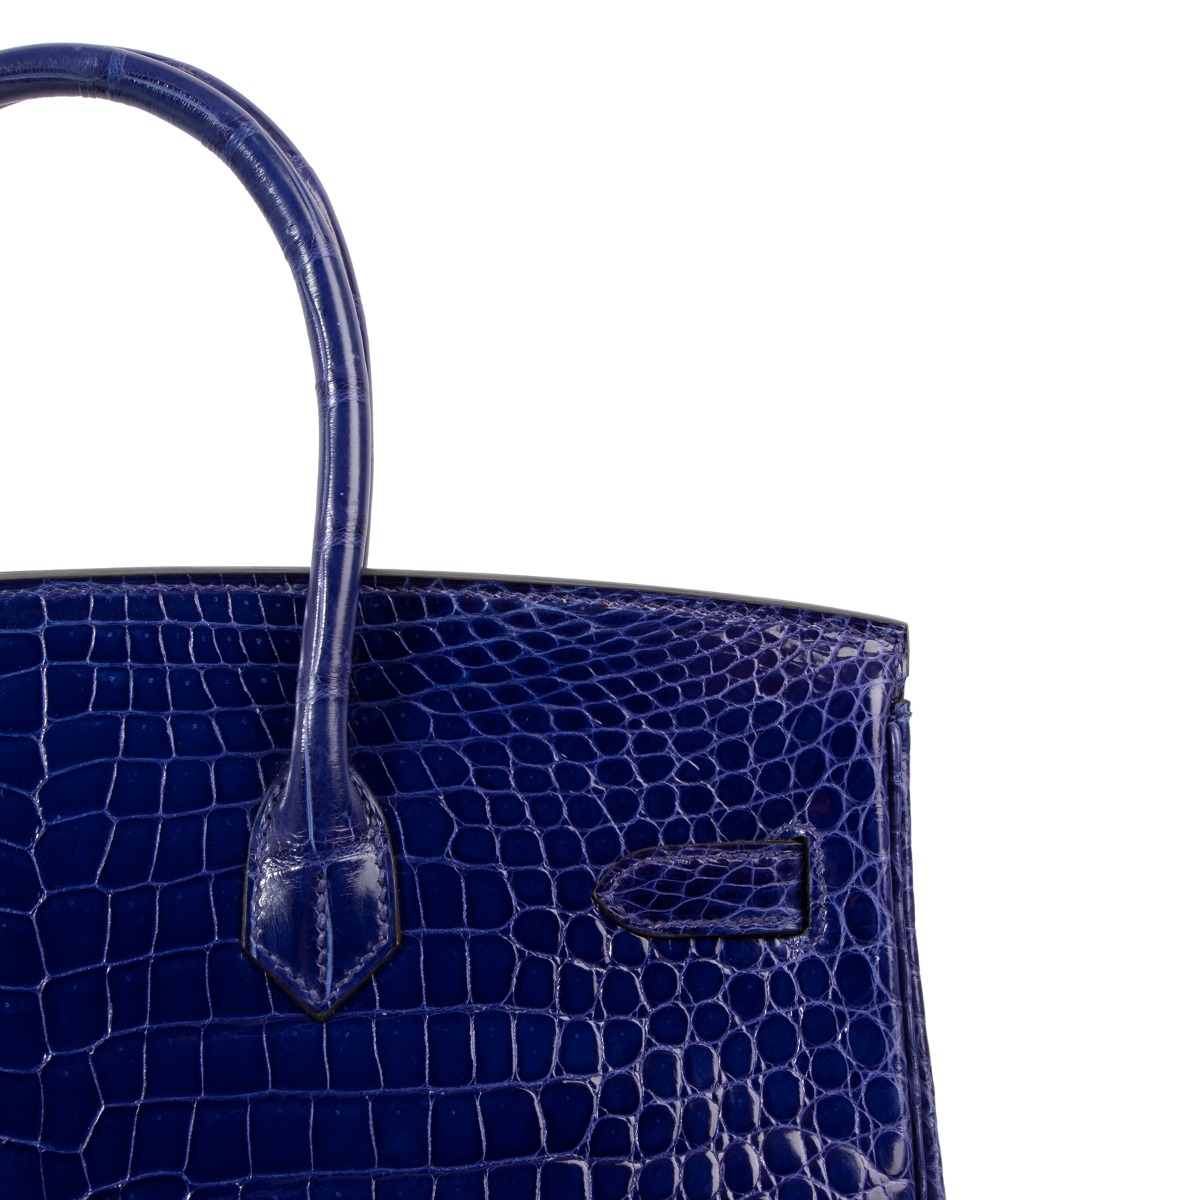 Hermès Birkin 35 Porosus Crocodile Bleu Electrique - Palladium